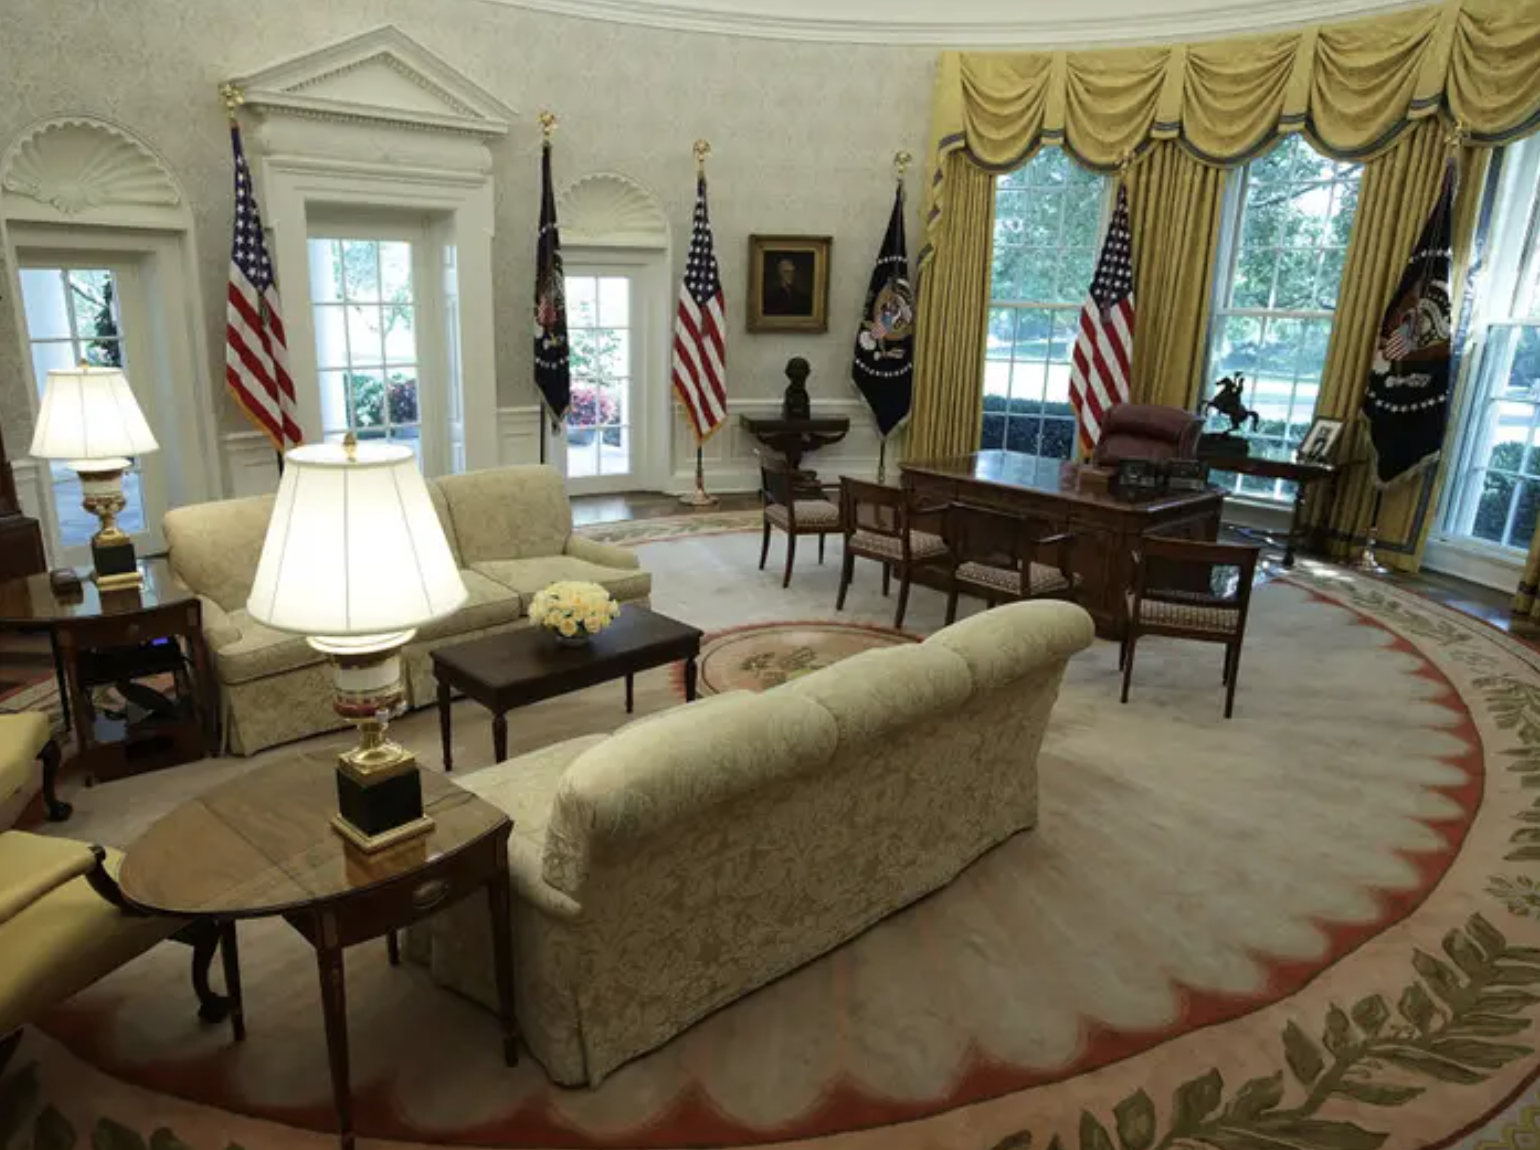 Trump's Oval Office